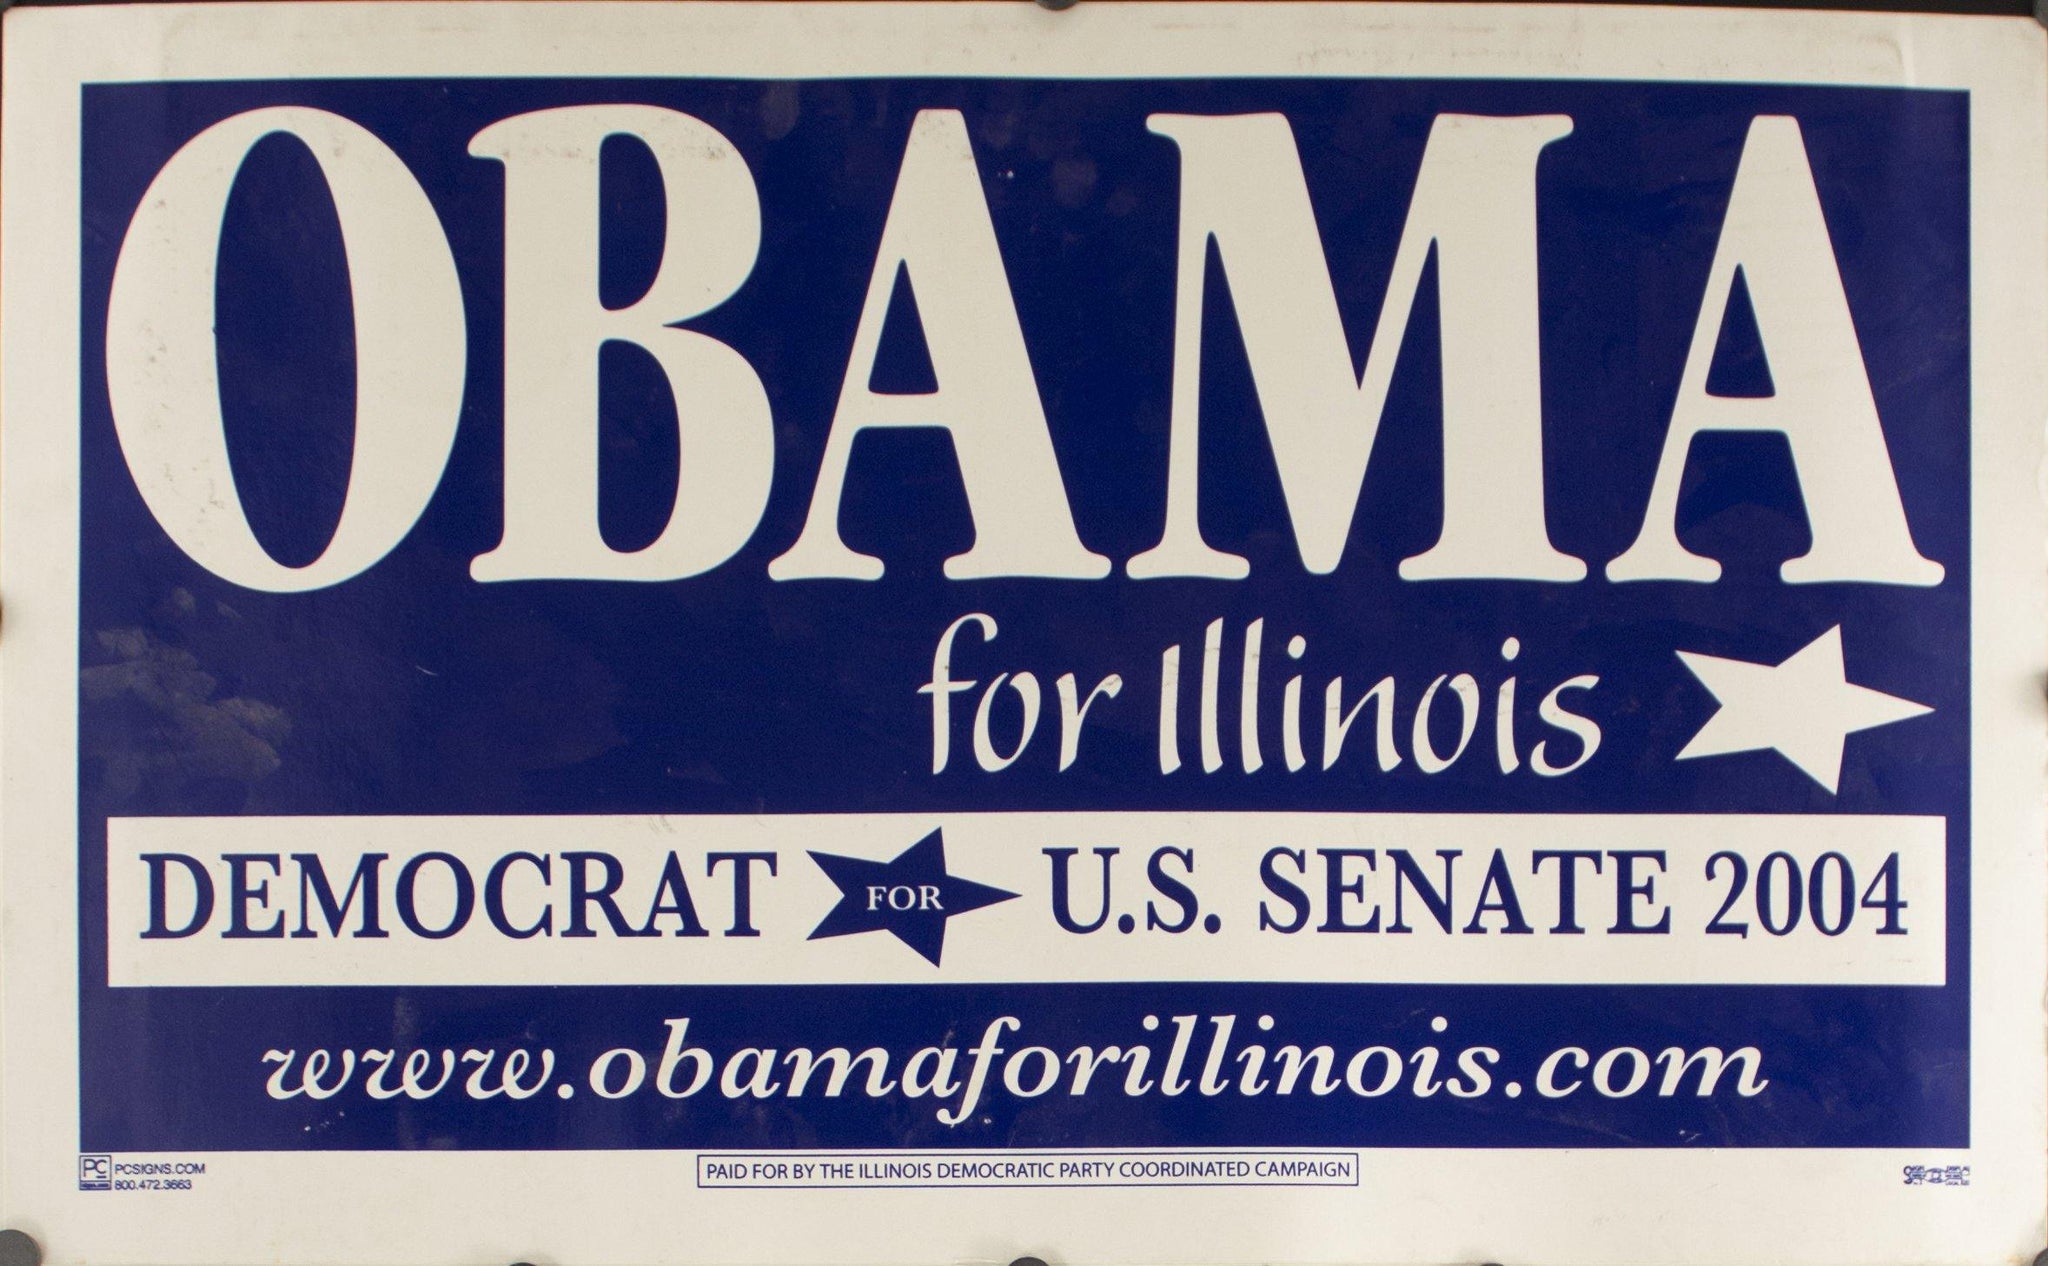 2004 Obama for Illinois | Democrat for US Senate 2004 - Golden Age Posters